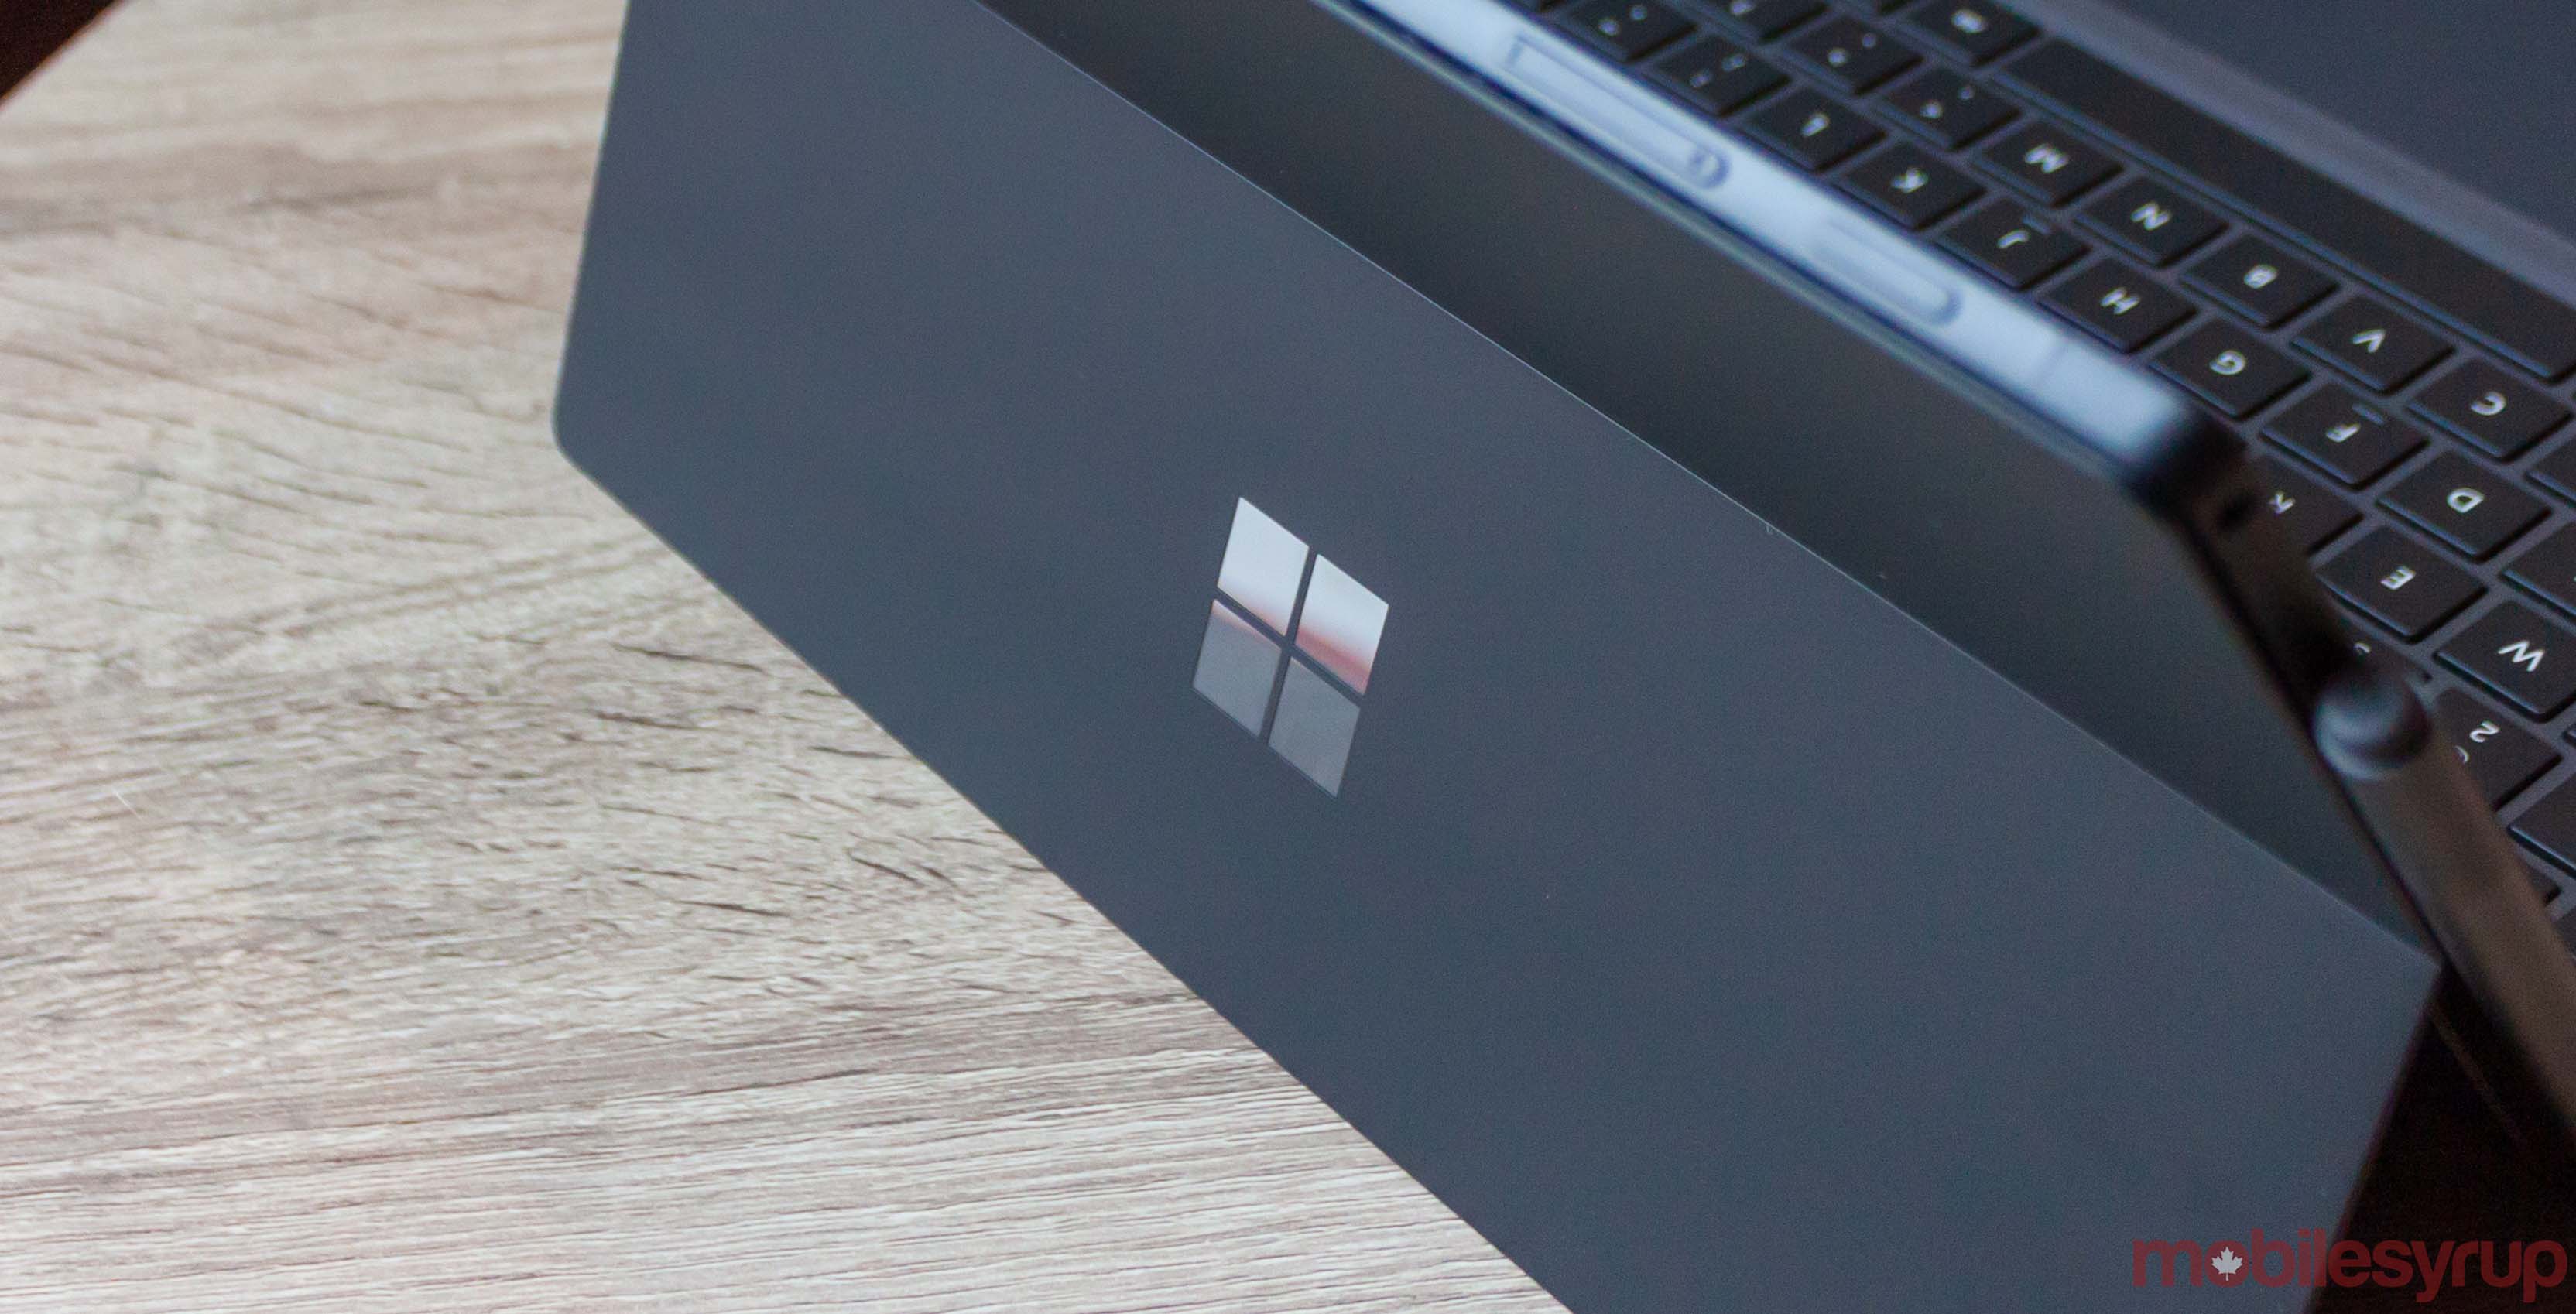 Microsoft Logo on Surface Pro 6